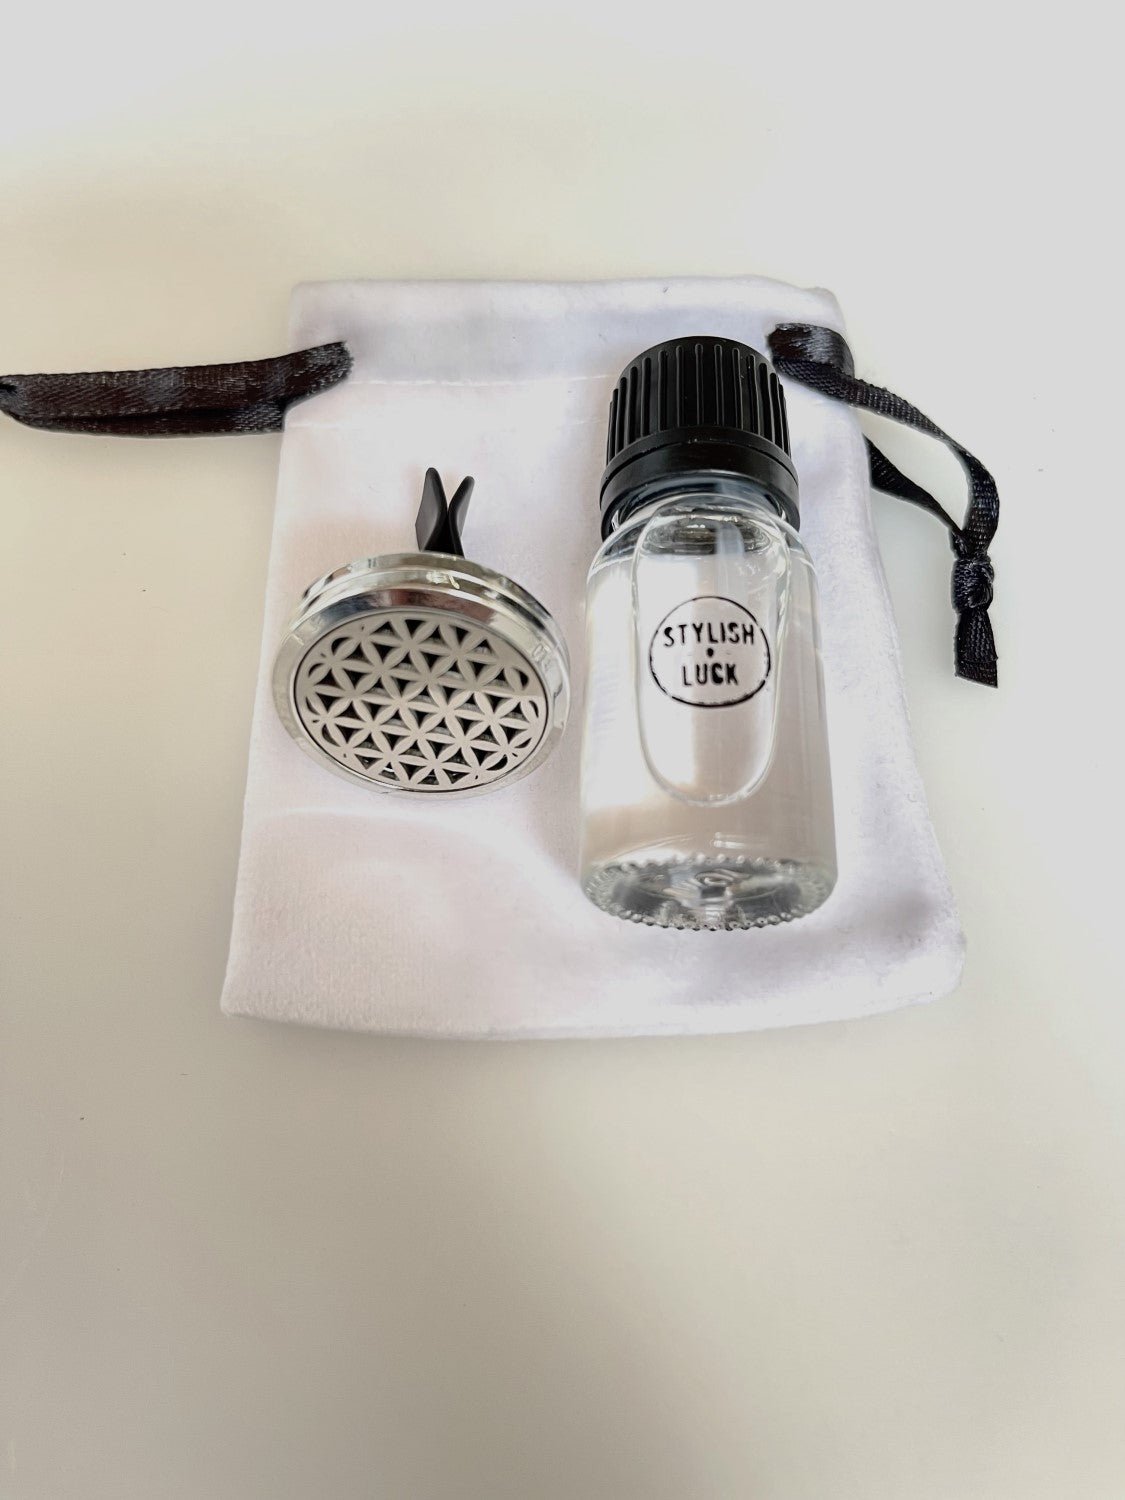 Flower of life aromatherapy Car Perfume Diffuser - Stylish Luck Home Decor | Hamsa \ Hand Of Fatima | Good Luck Gifts